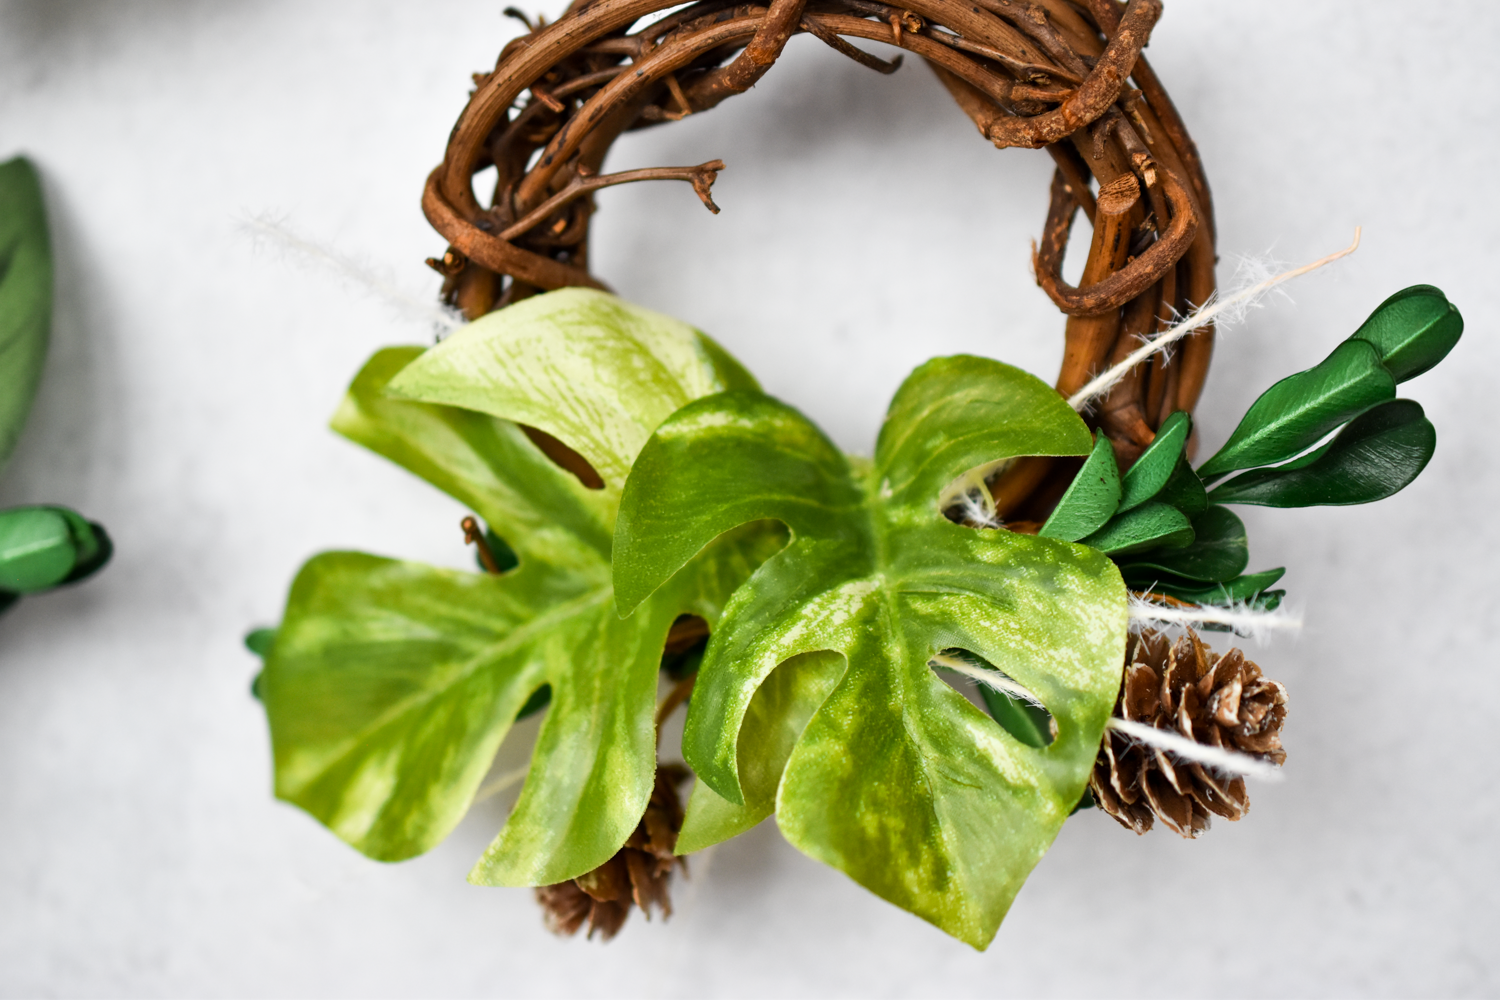 Miniature Planty Grapevine Holiday Wreath Decor  |. Christmas Wreath Ornament  |  Small Wreath Decor  |  Christmas Tree Decoration